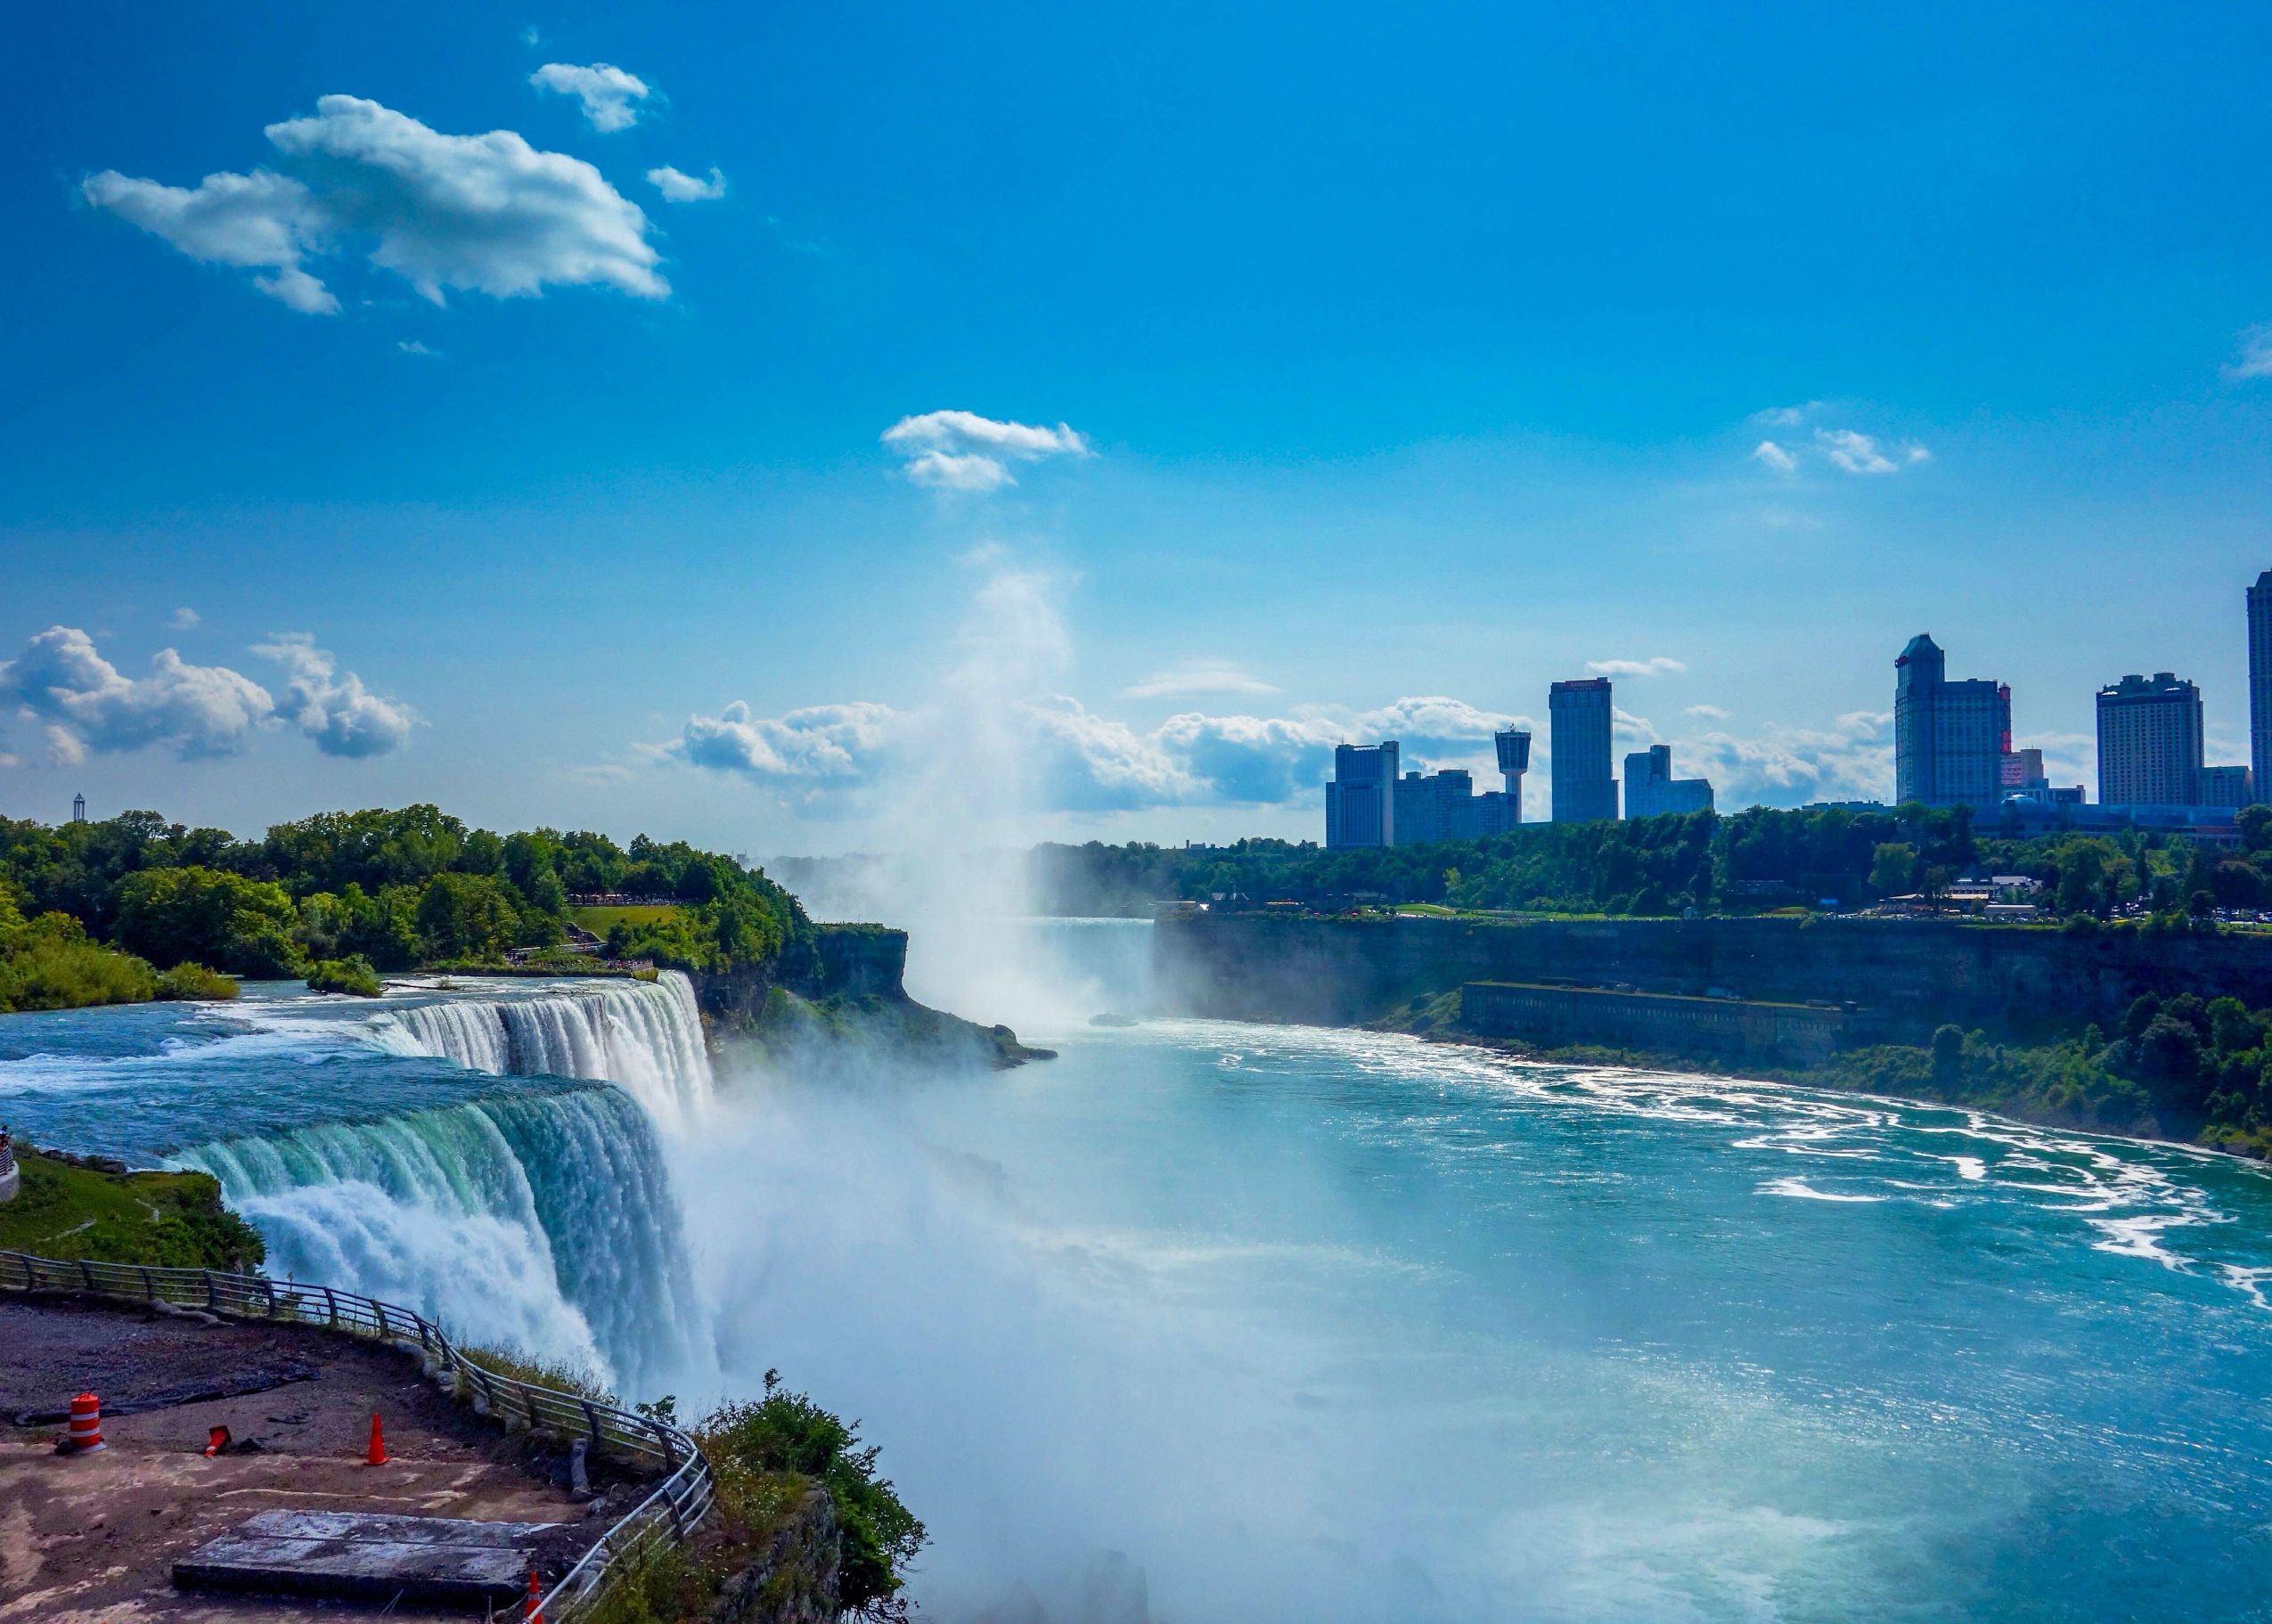 Niagara falls installment loan image of falls